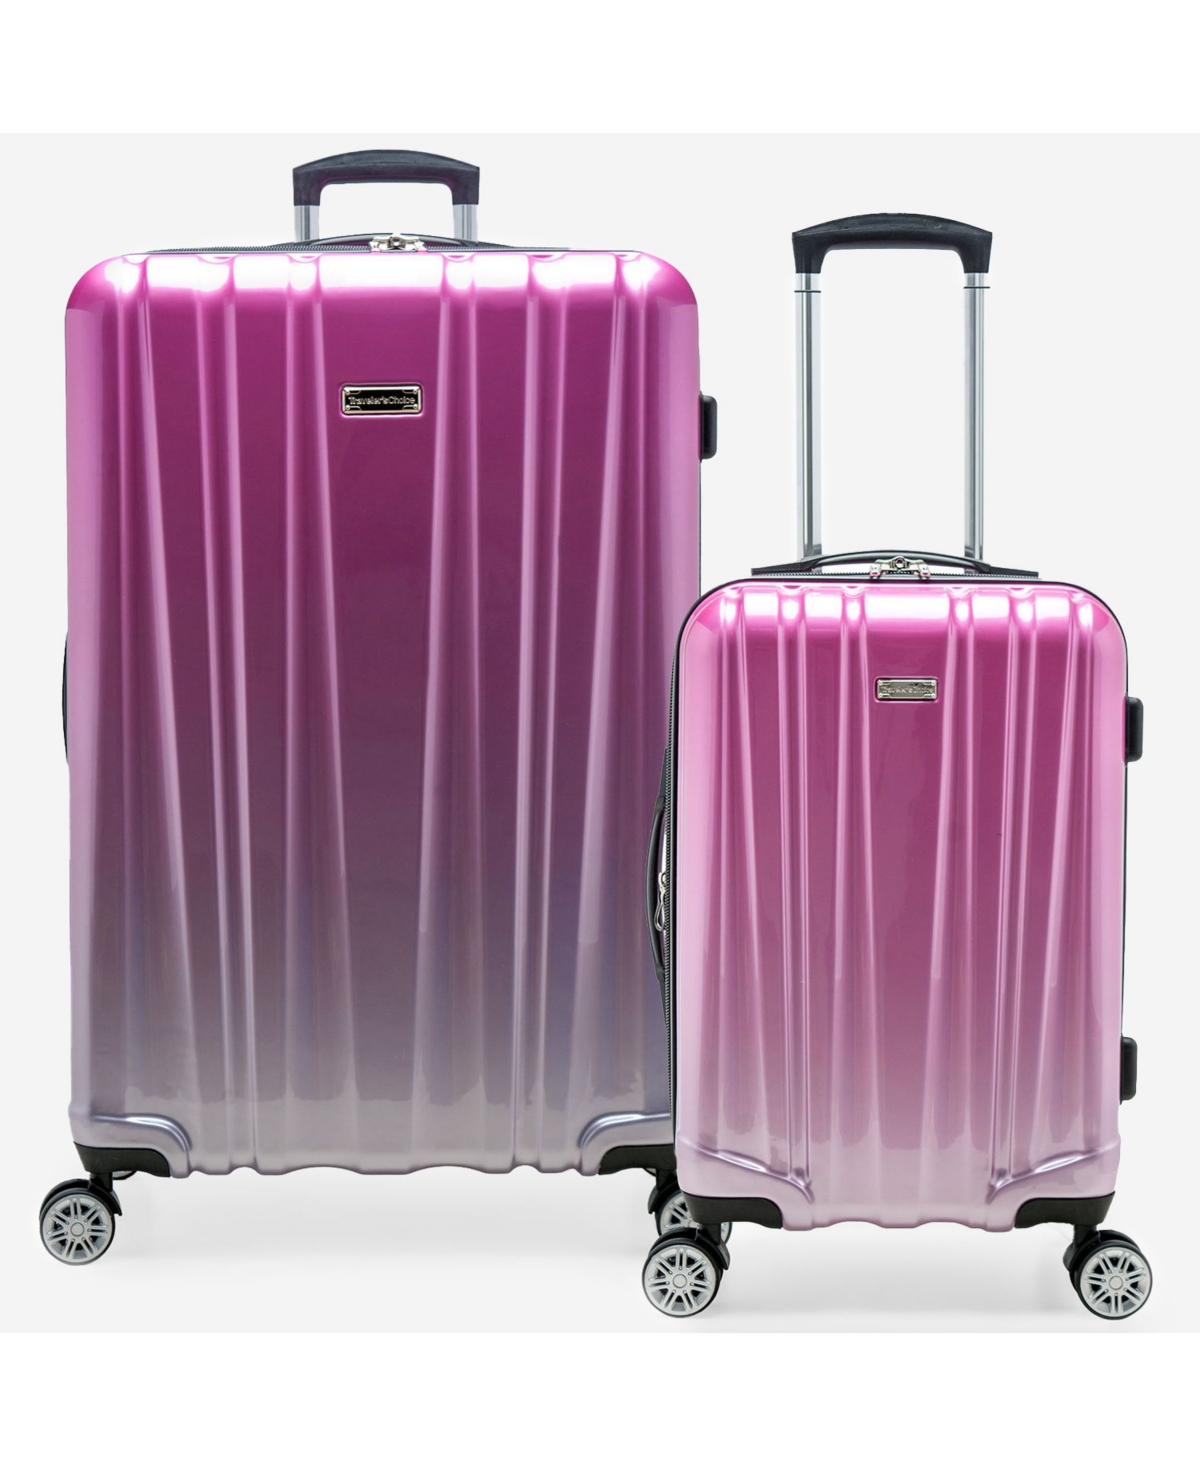 Ruma Ii Hardside 2 Piece Luggage Set - Twinkle Lilac